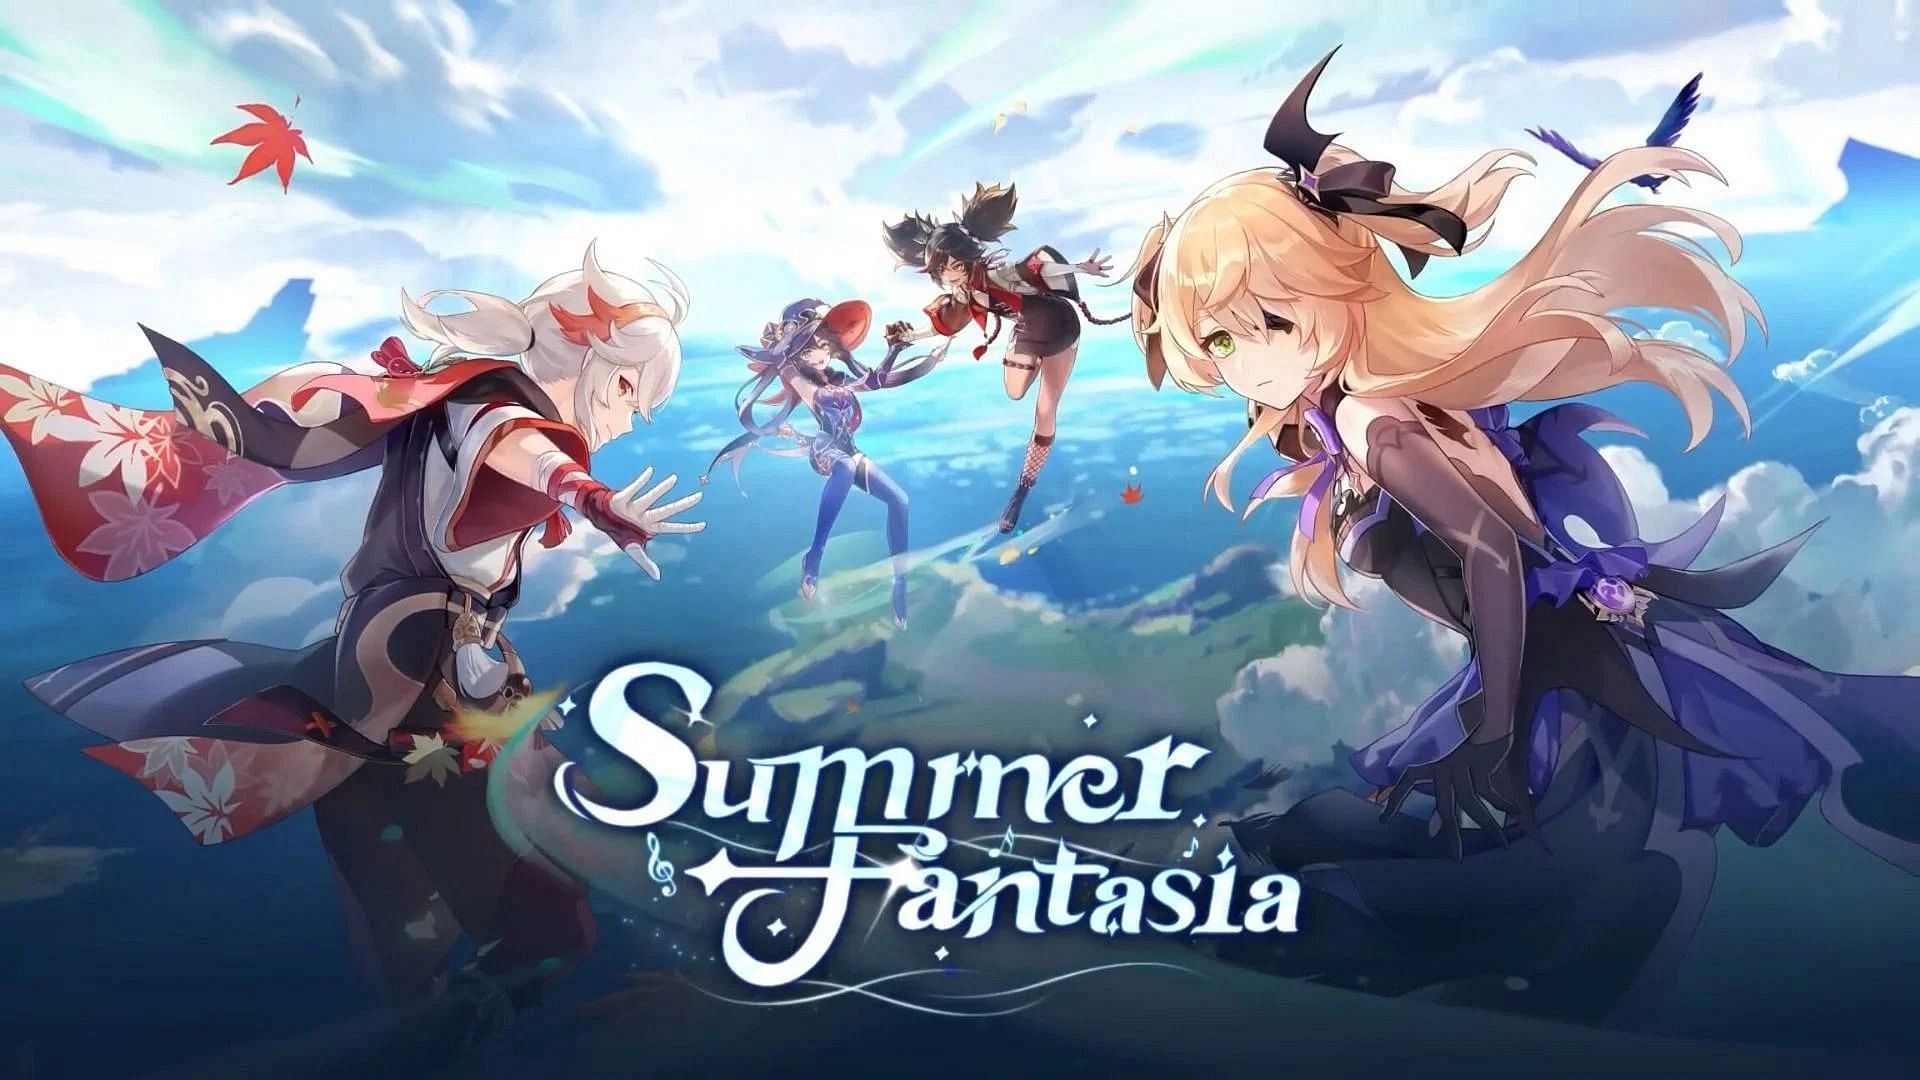 Summer Fantasia is up next in Genshin Impact 2.8 (Image via HoYoverse)